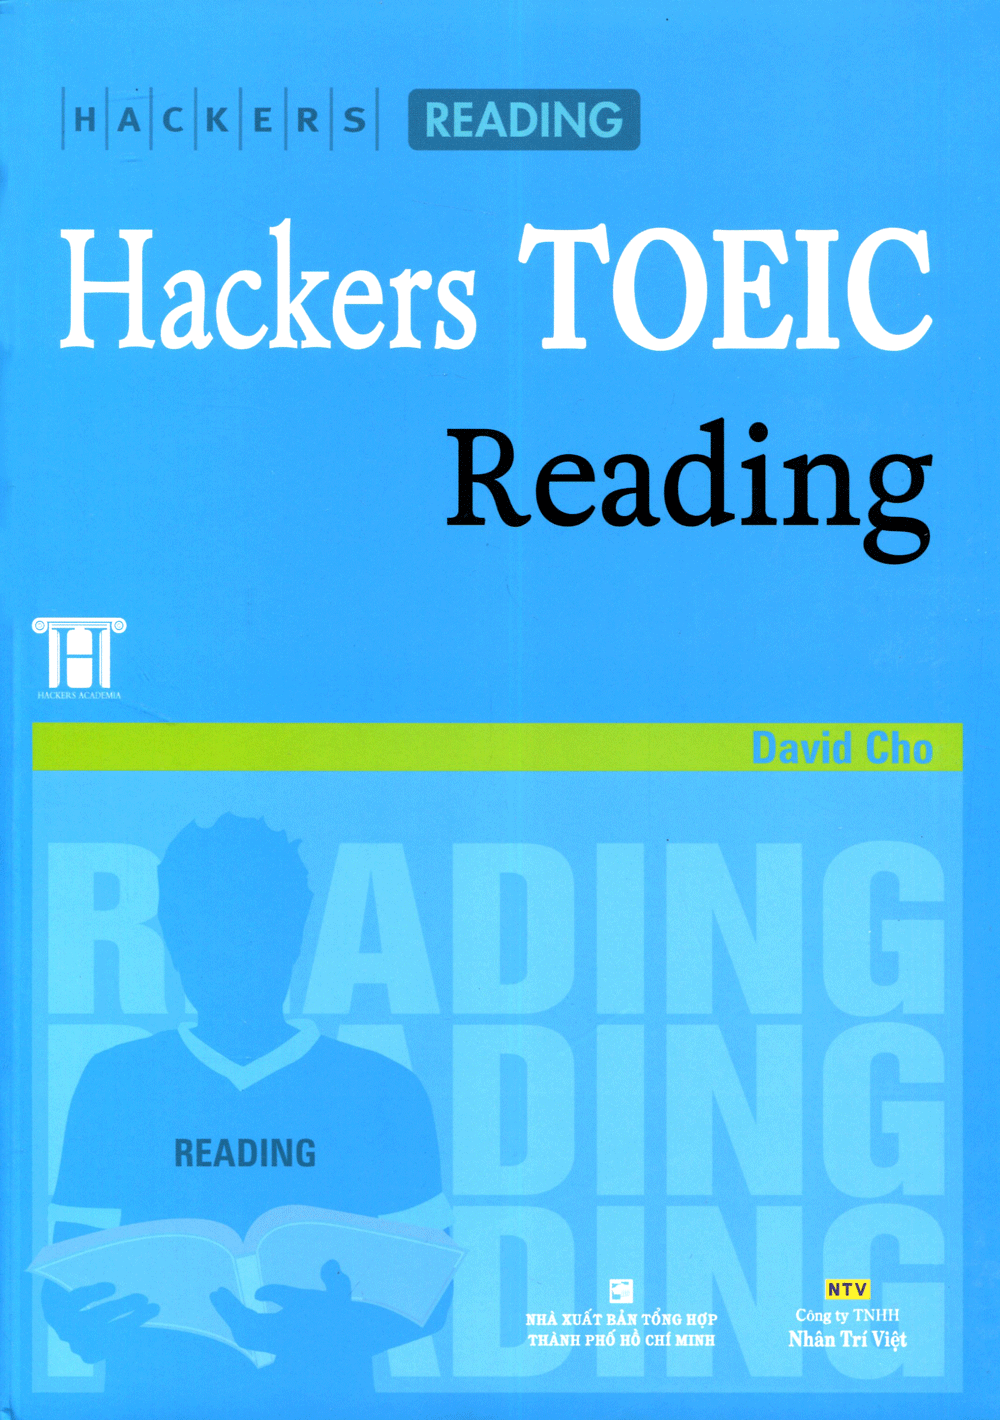 Hackers TOEIC Reading